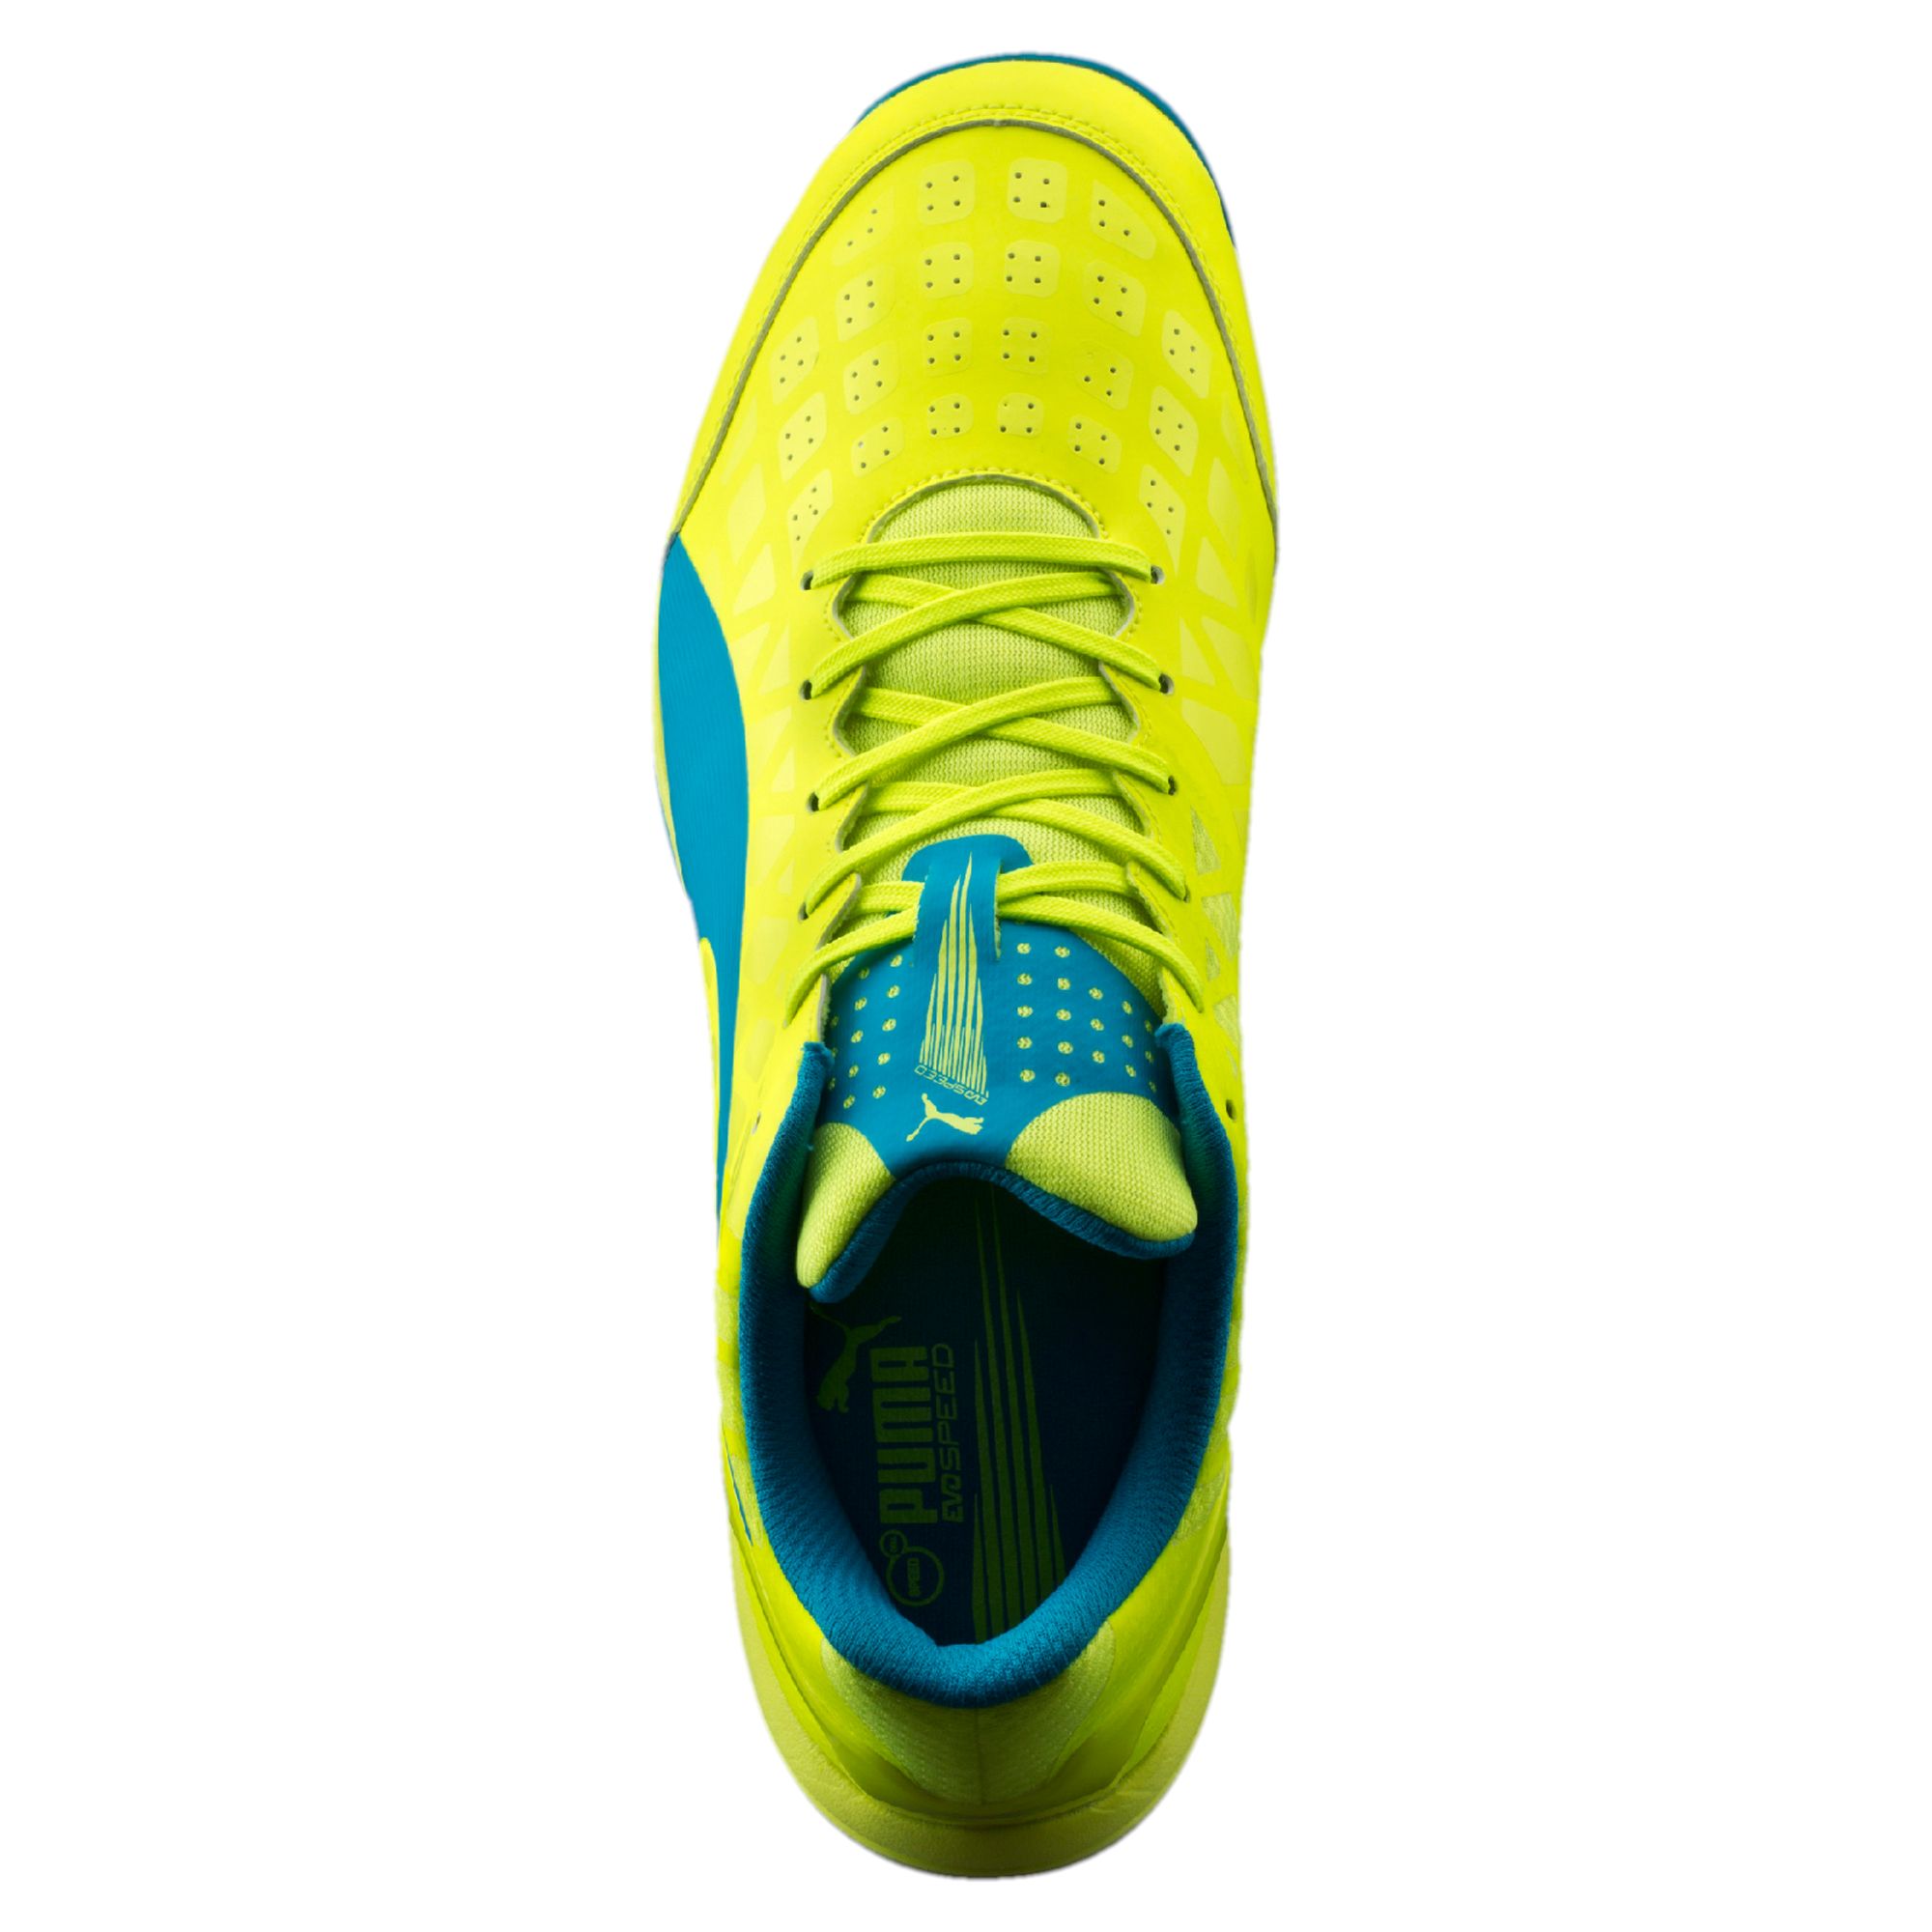 PUMA evoSPEED Spike 1.4 Cricket Boots Footwear Cricket Men New | eBay